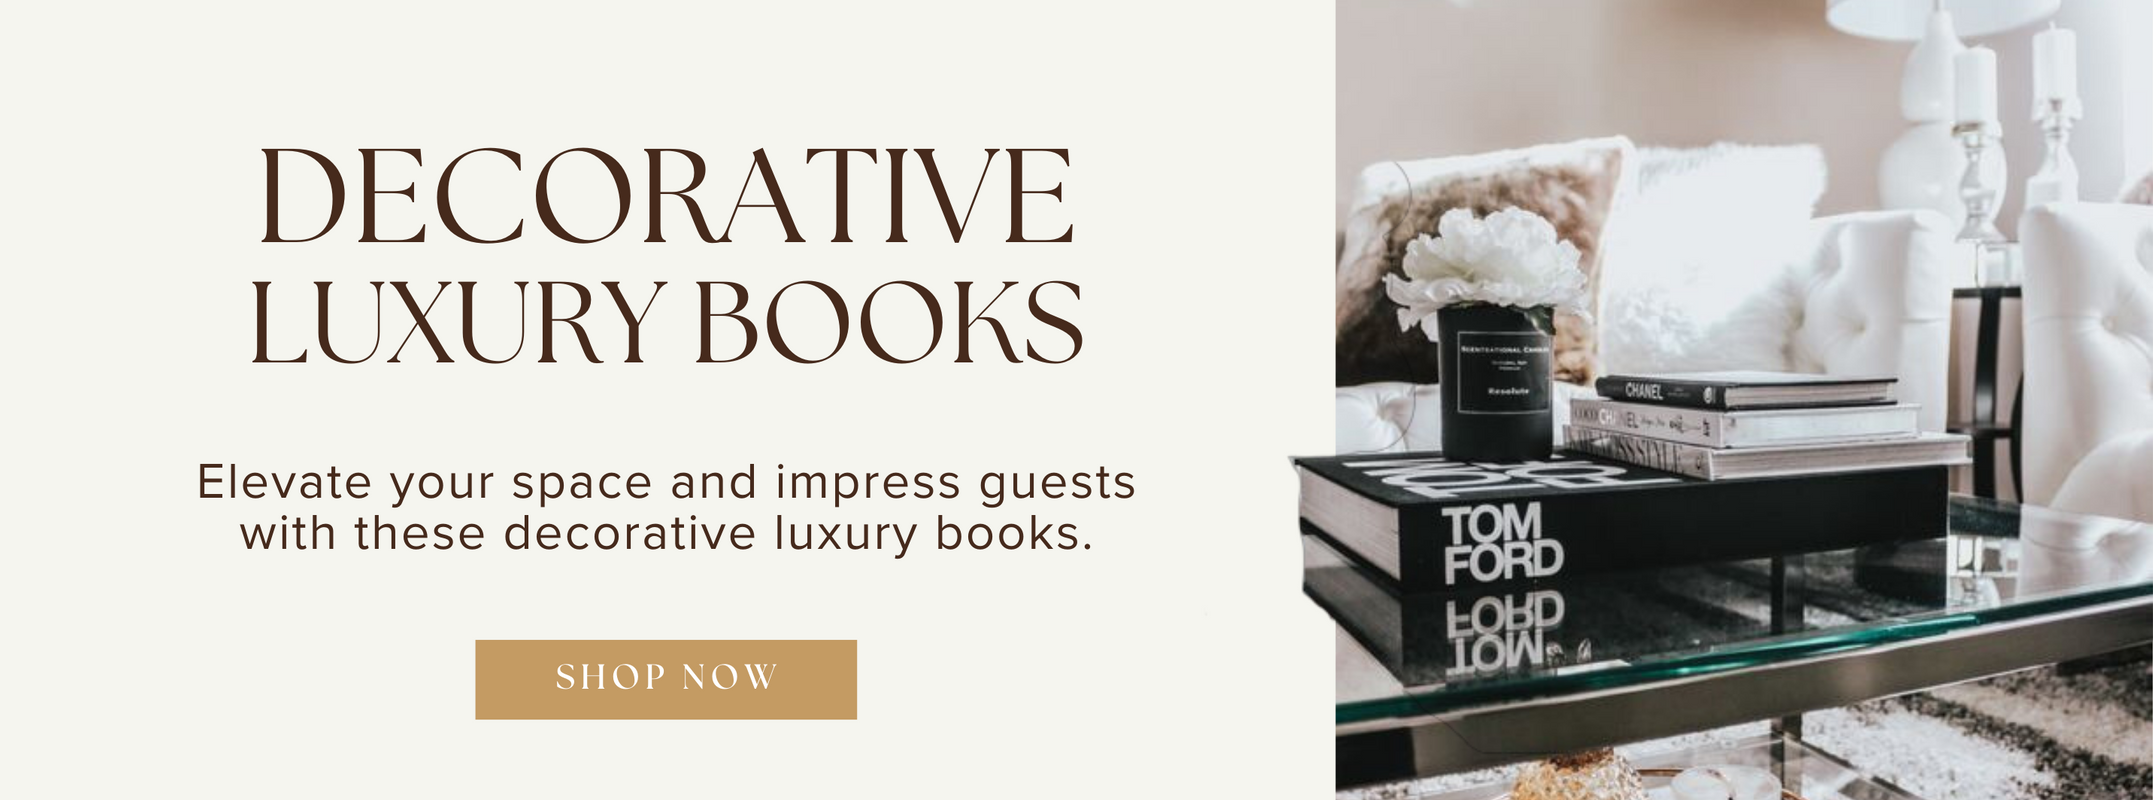 Decorative Luxury Books – Paraisodecor